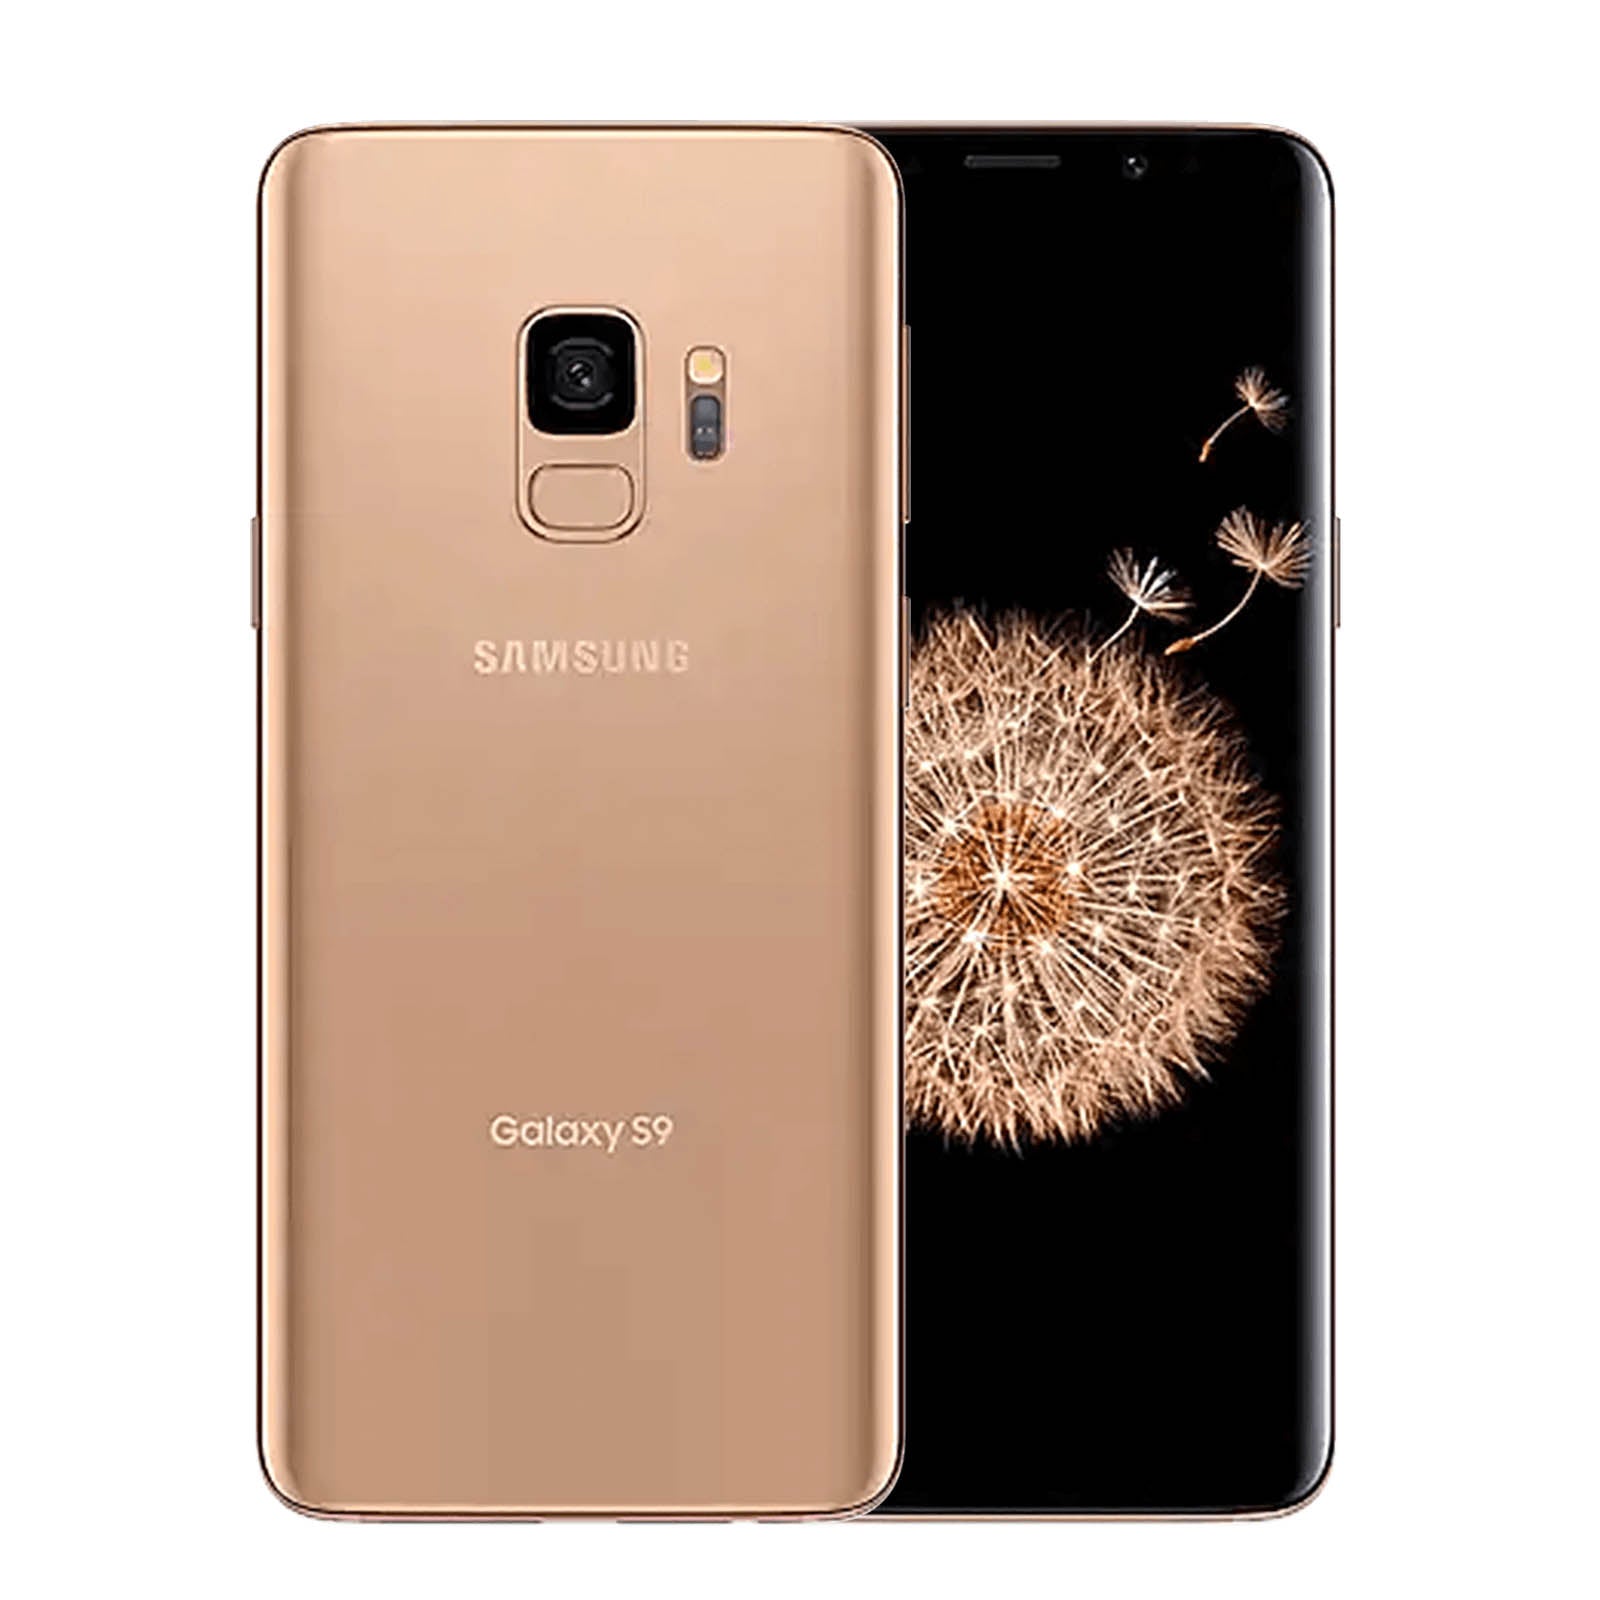 Samsung Galaxy S9 64GB Gold Good - Unlocked